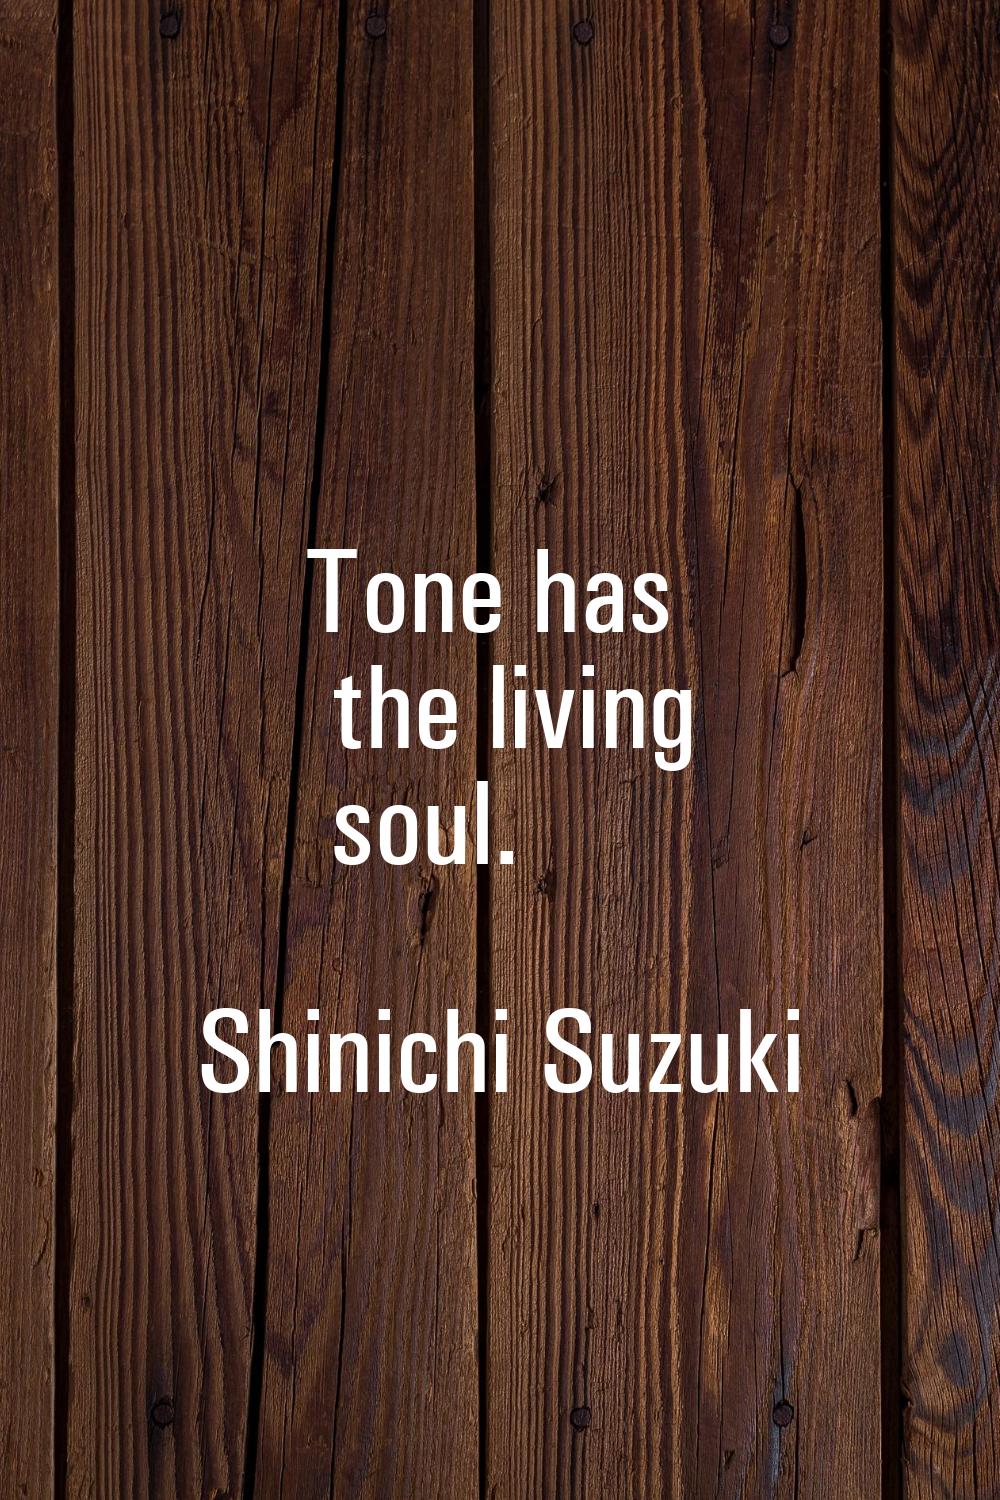 Tone has the living soul.